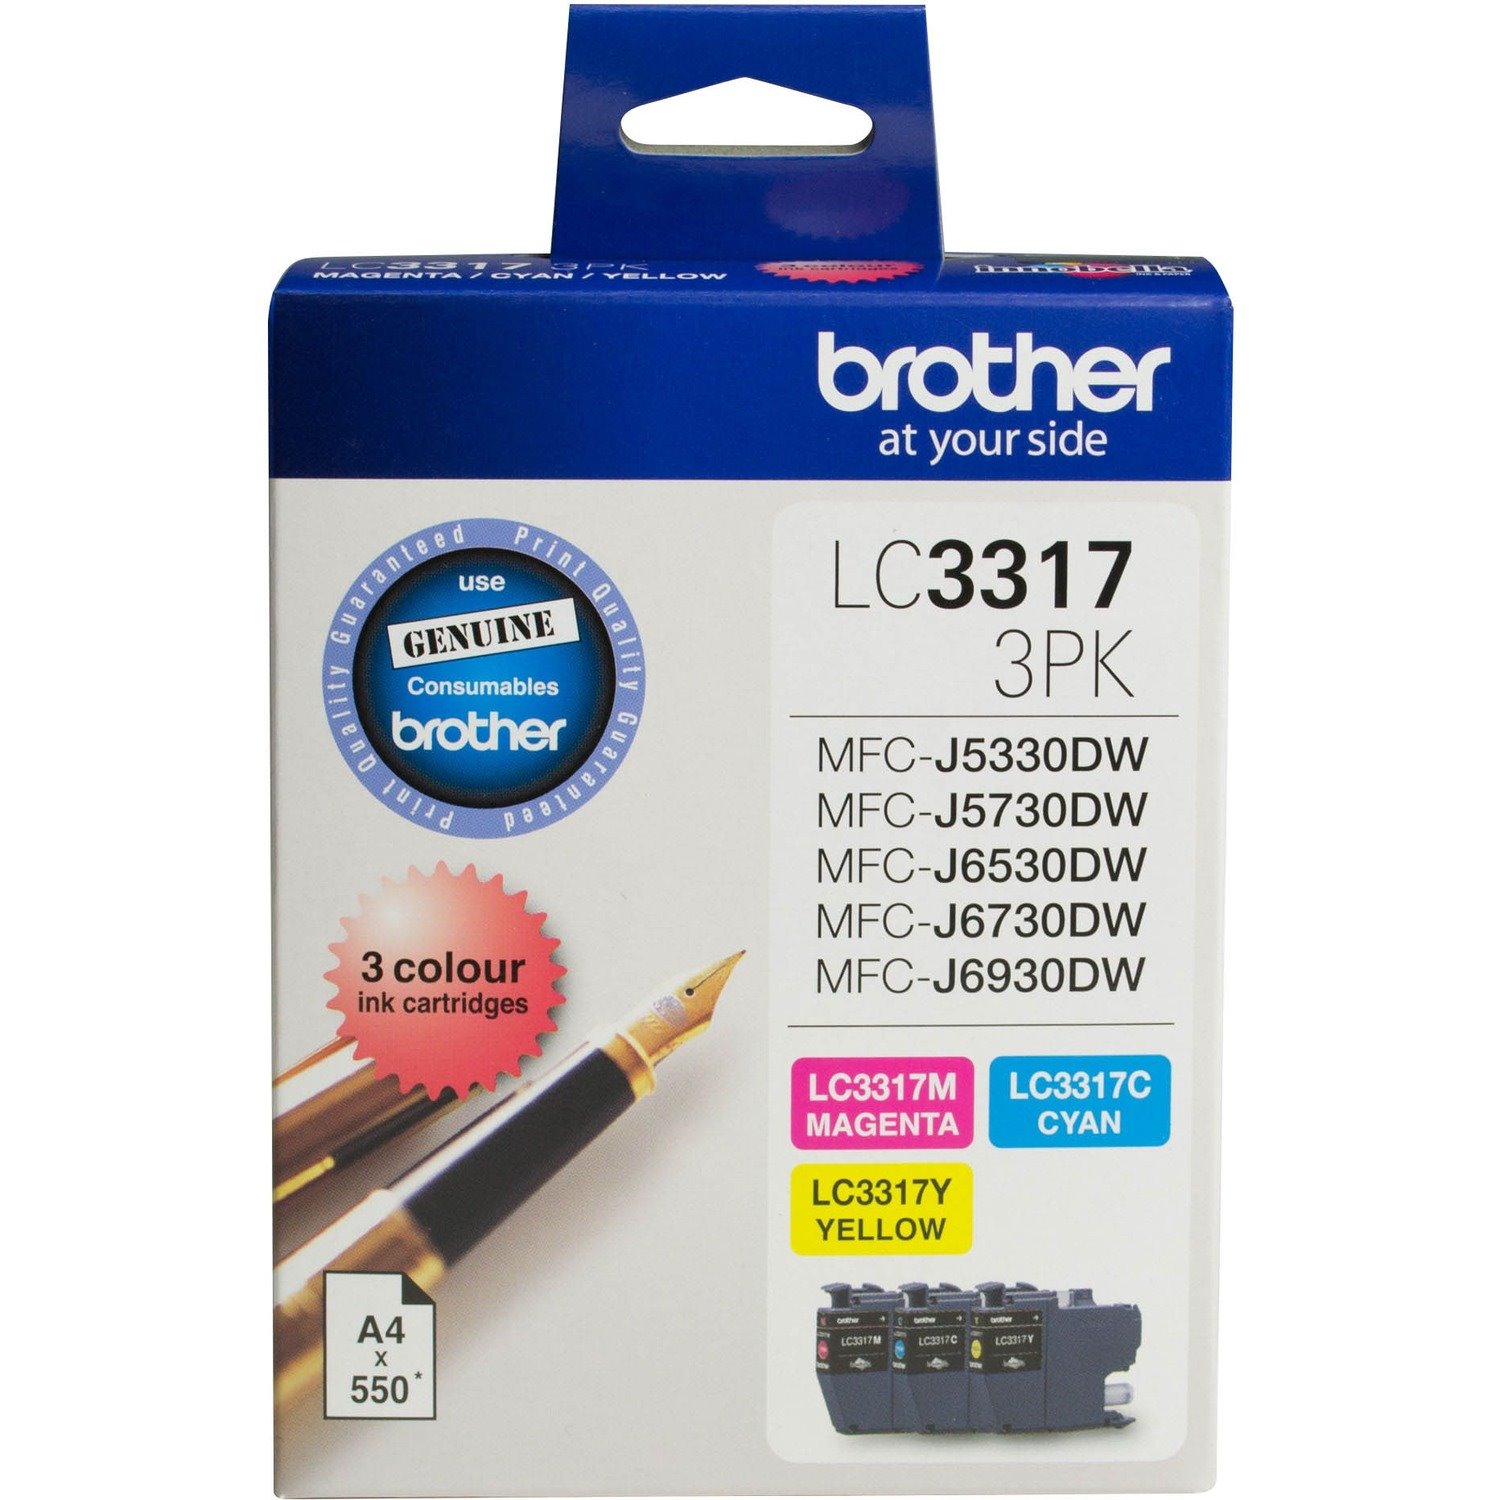 Brother LC33173PK Original Ink Cartridge - Cyan, Magenta, Yellow